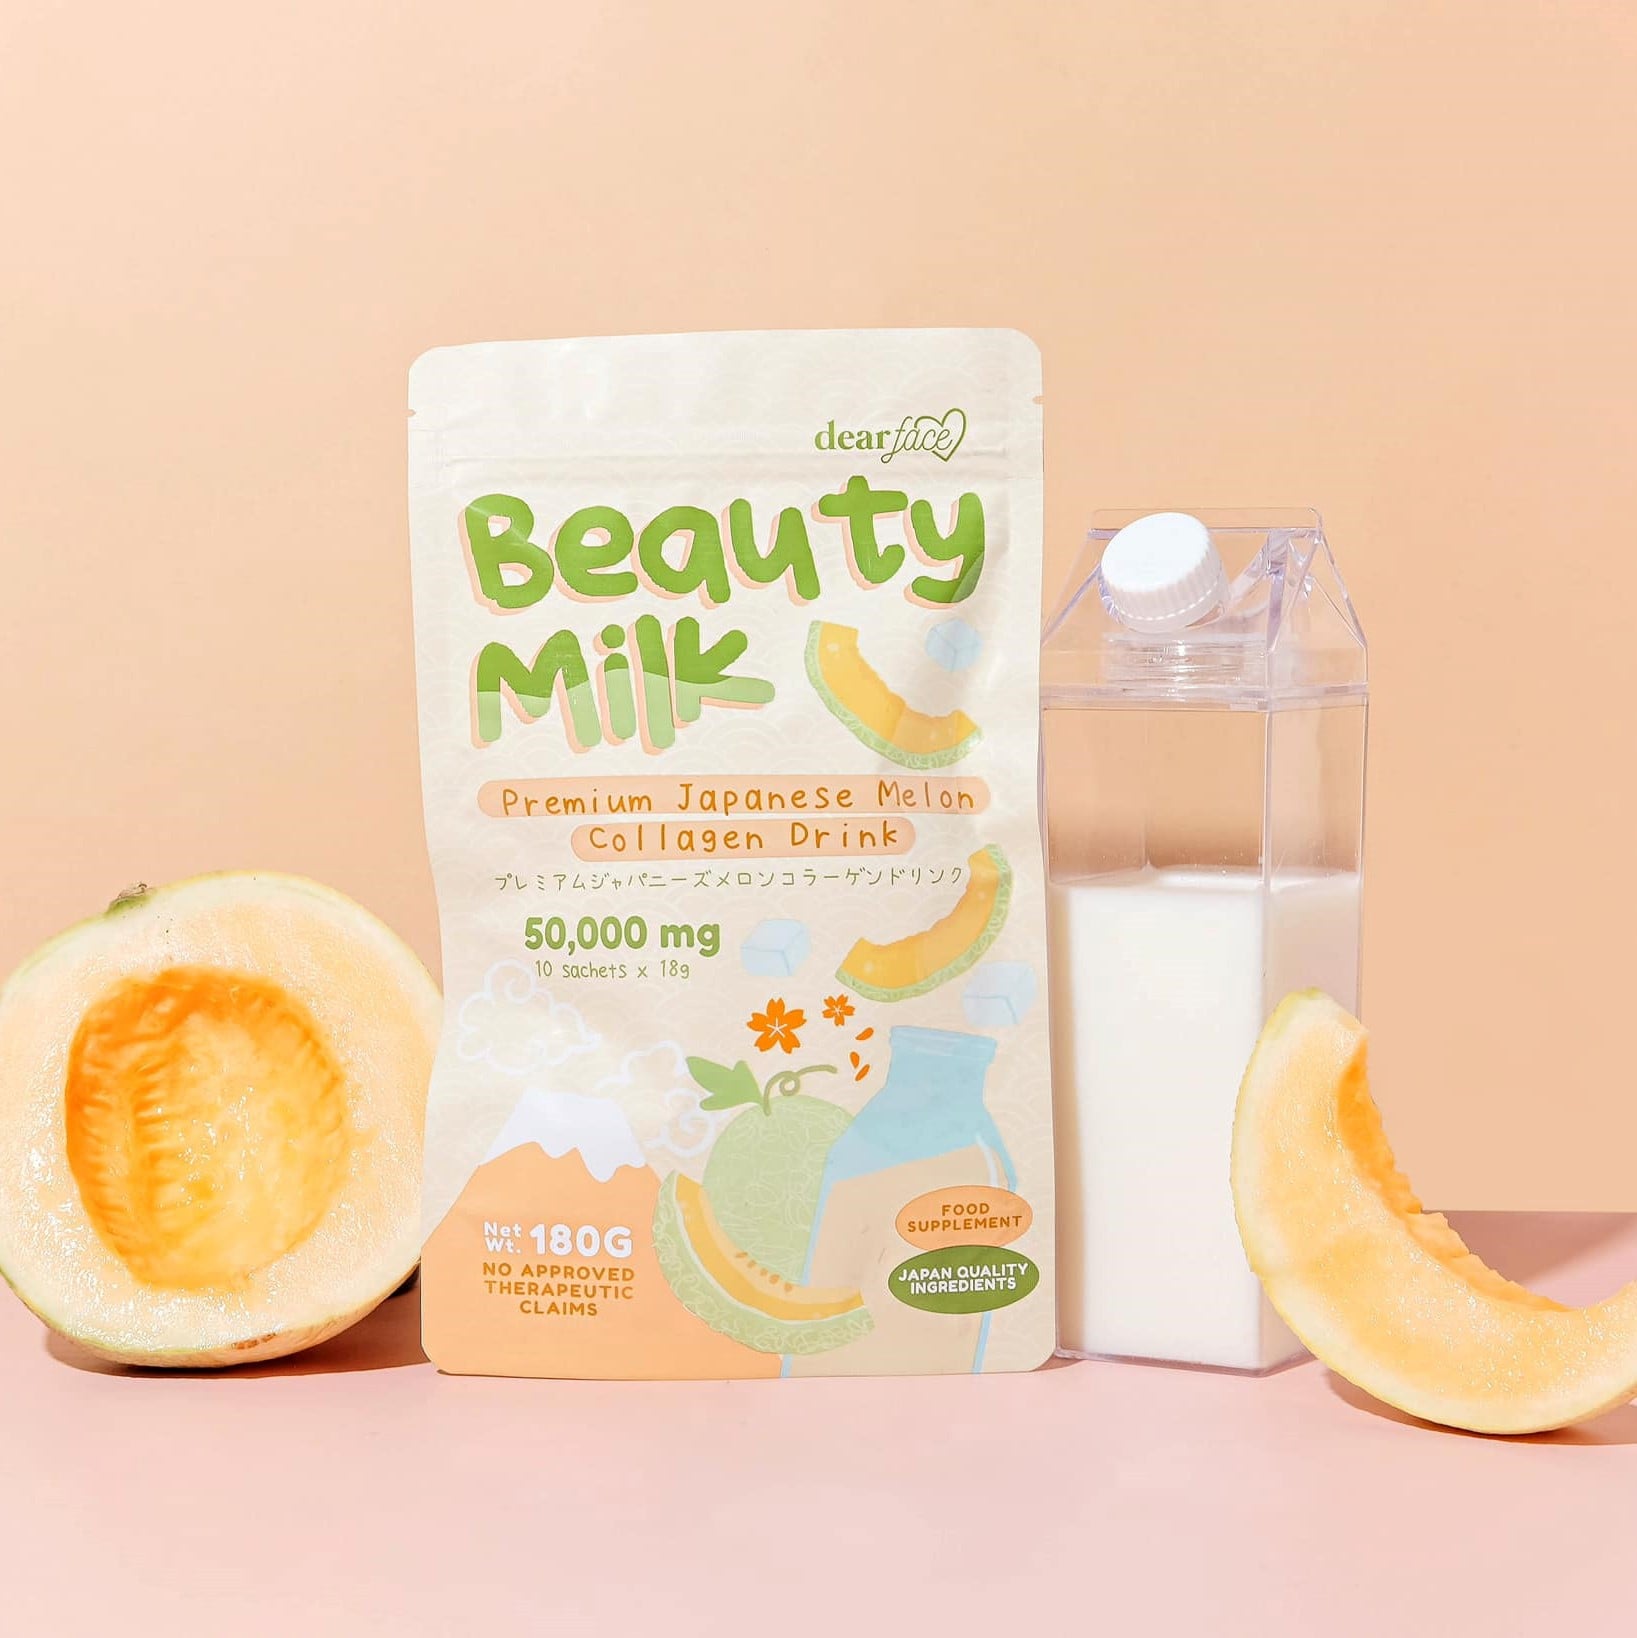 Dear Face Beauty Milk x2 packs